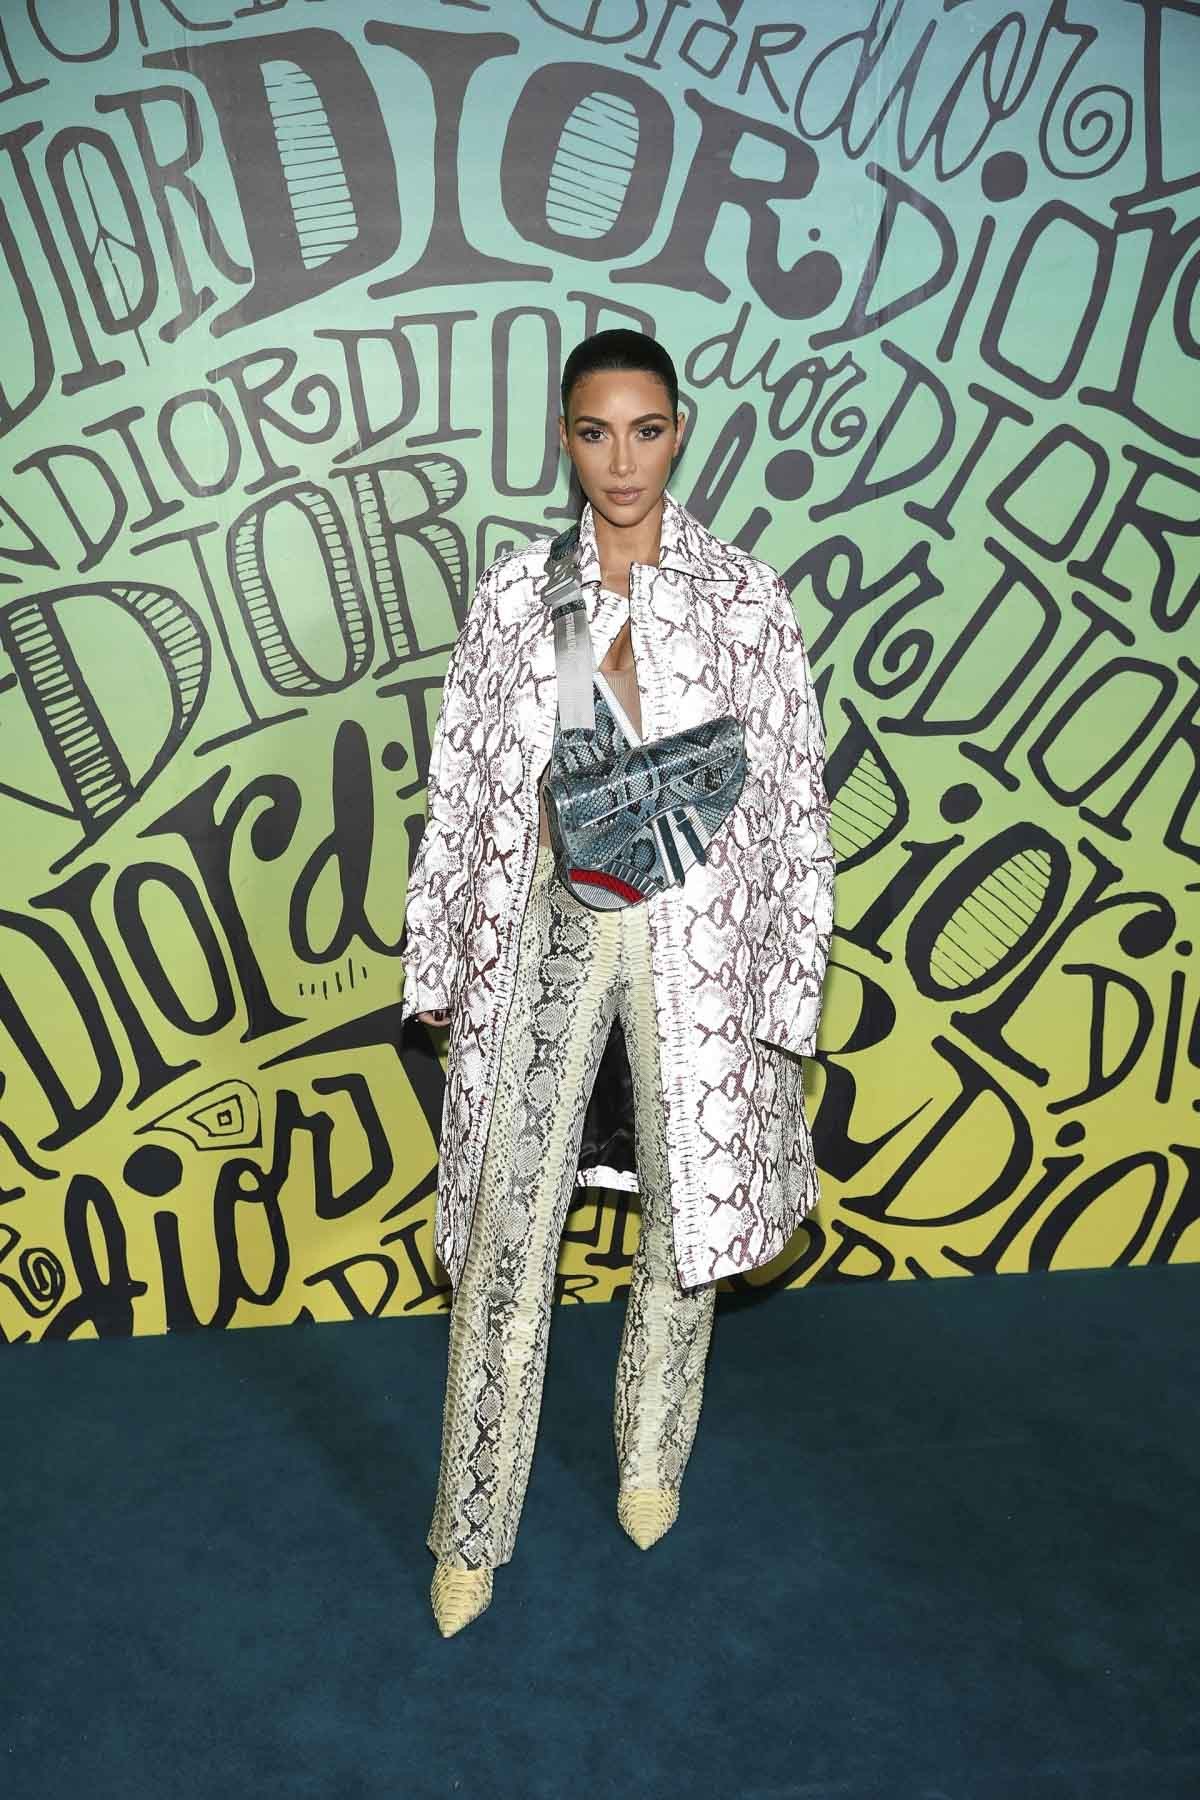 Billionaire Kim Kardashian 'shows off' her expensive designer handbag collection